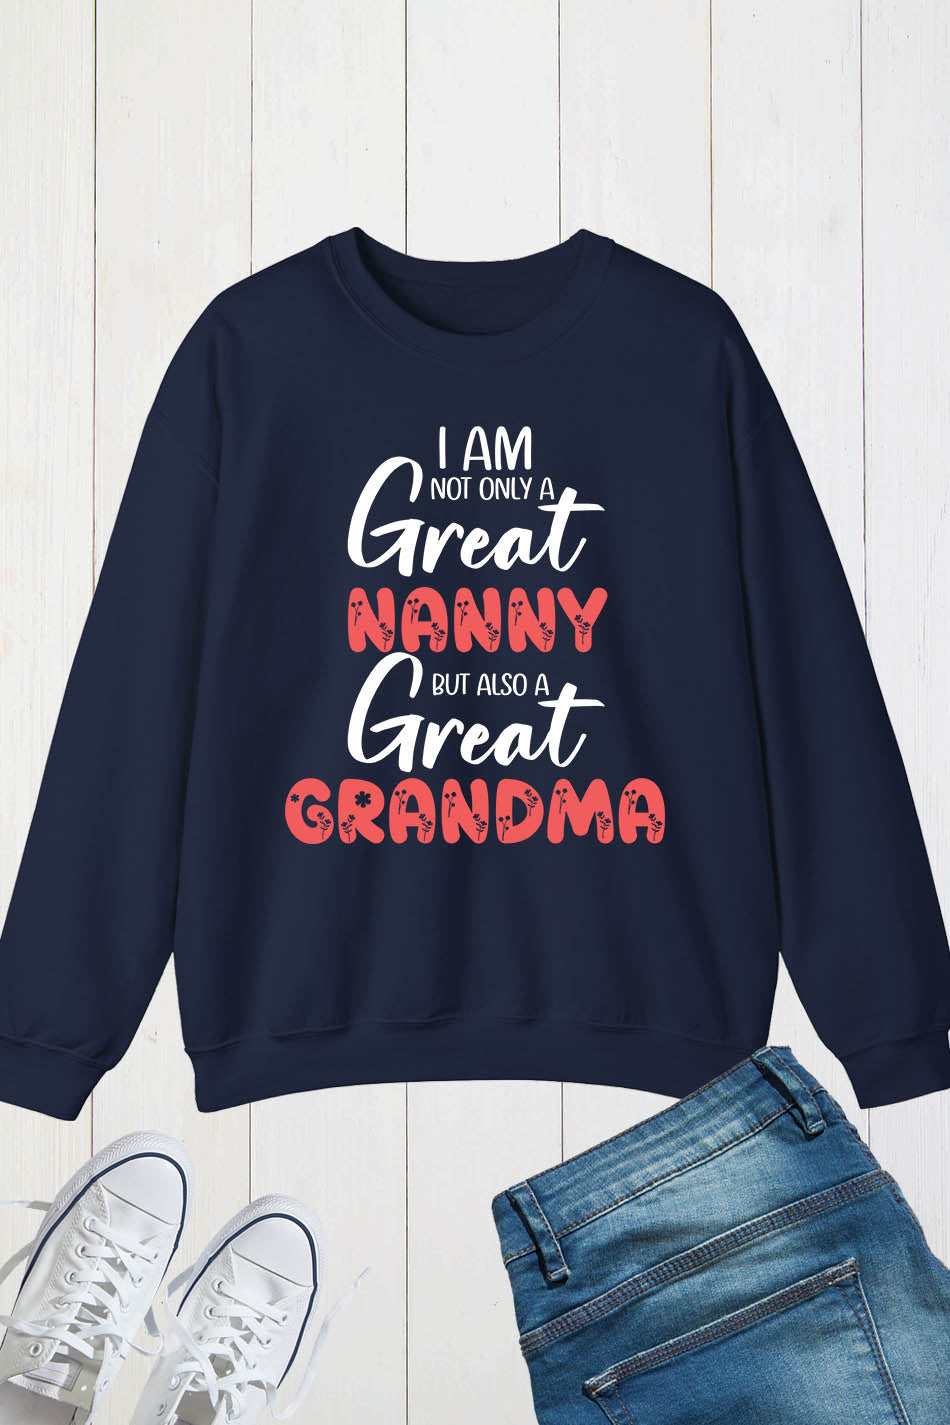 Great Grandma Sweatshirt Gift